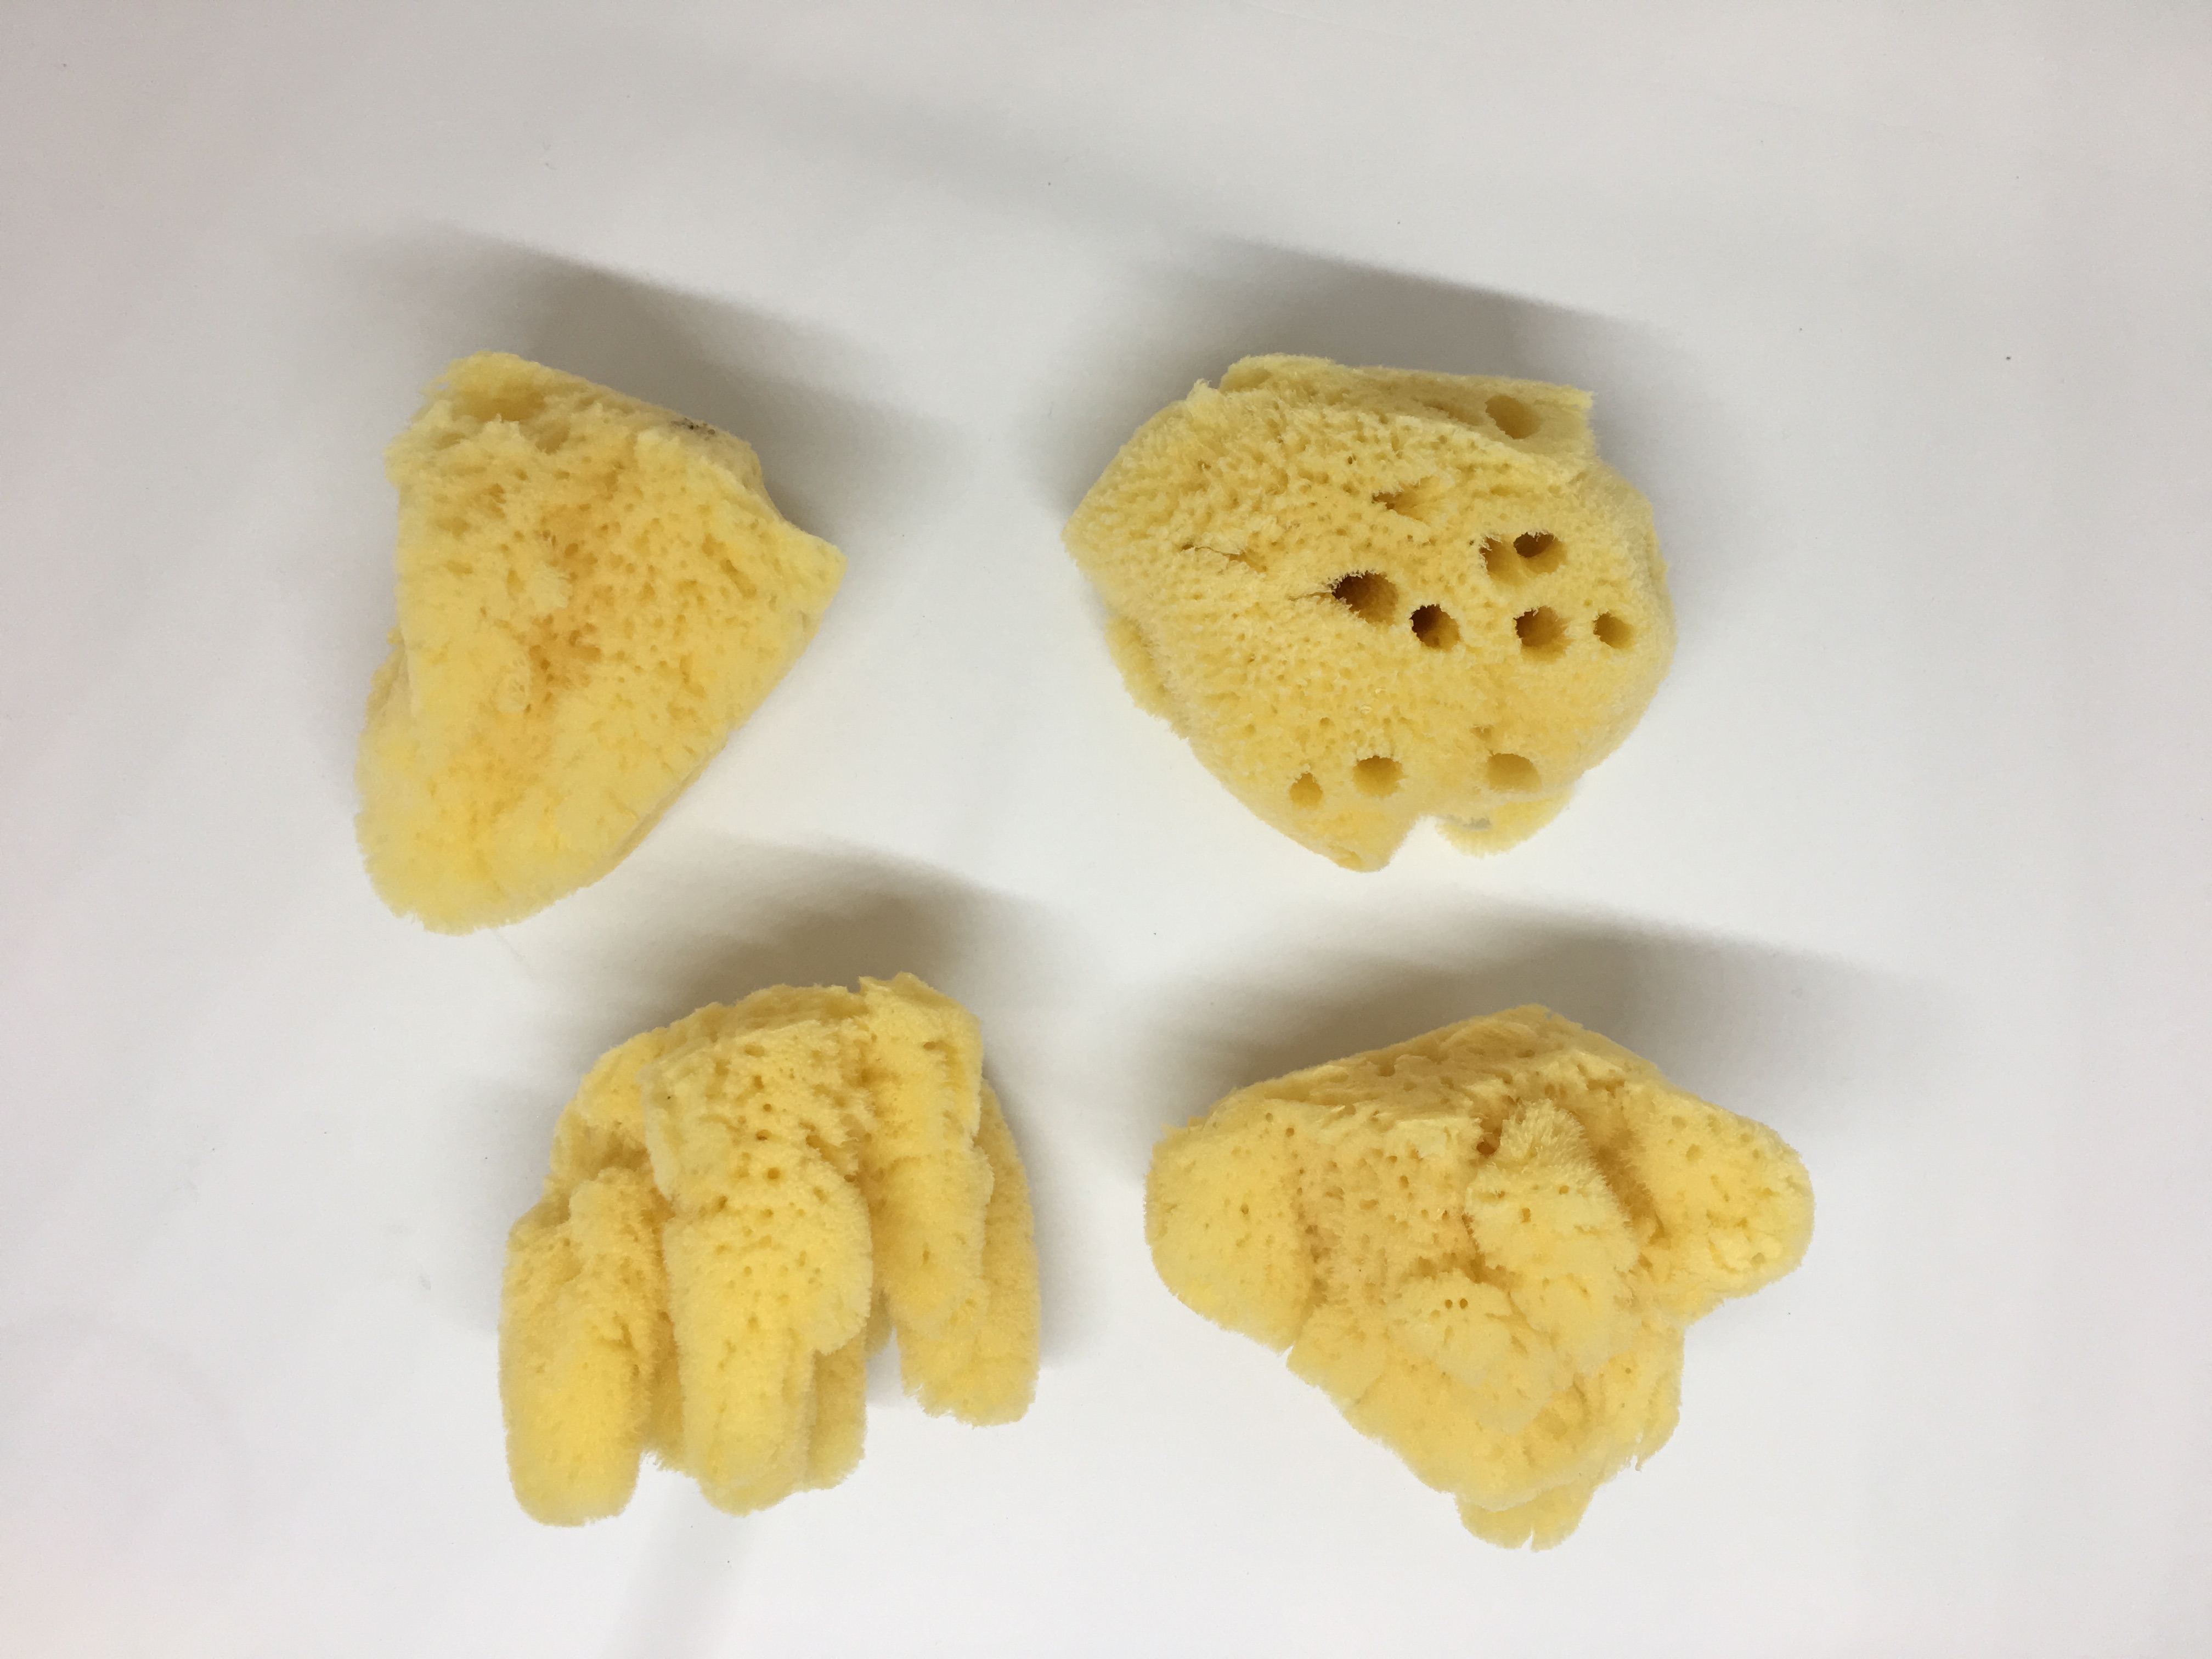 4-Pack of Hermit Crab Sea Sponges (All Natural Hermit Crab Sponge) Awesome  Aquatics 